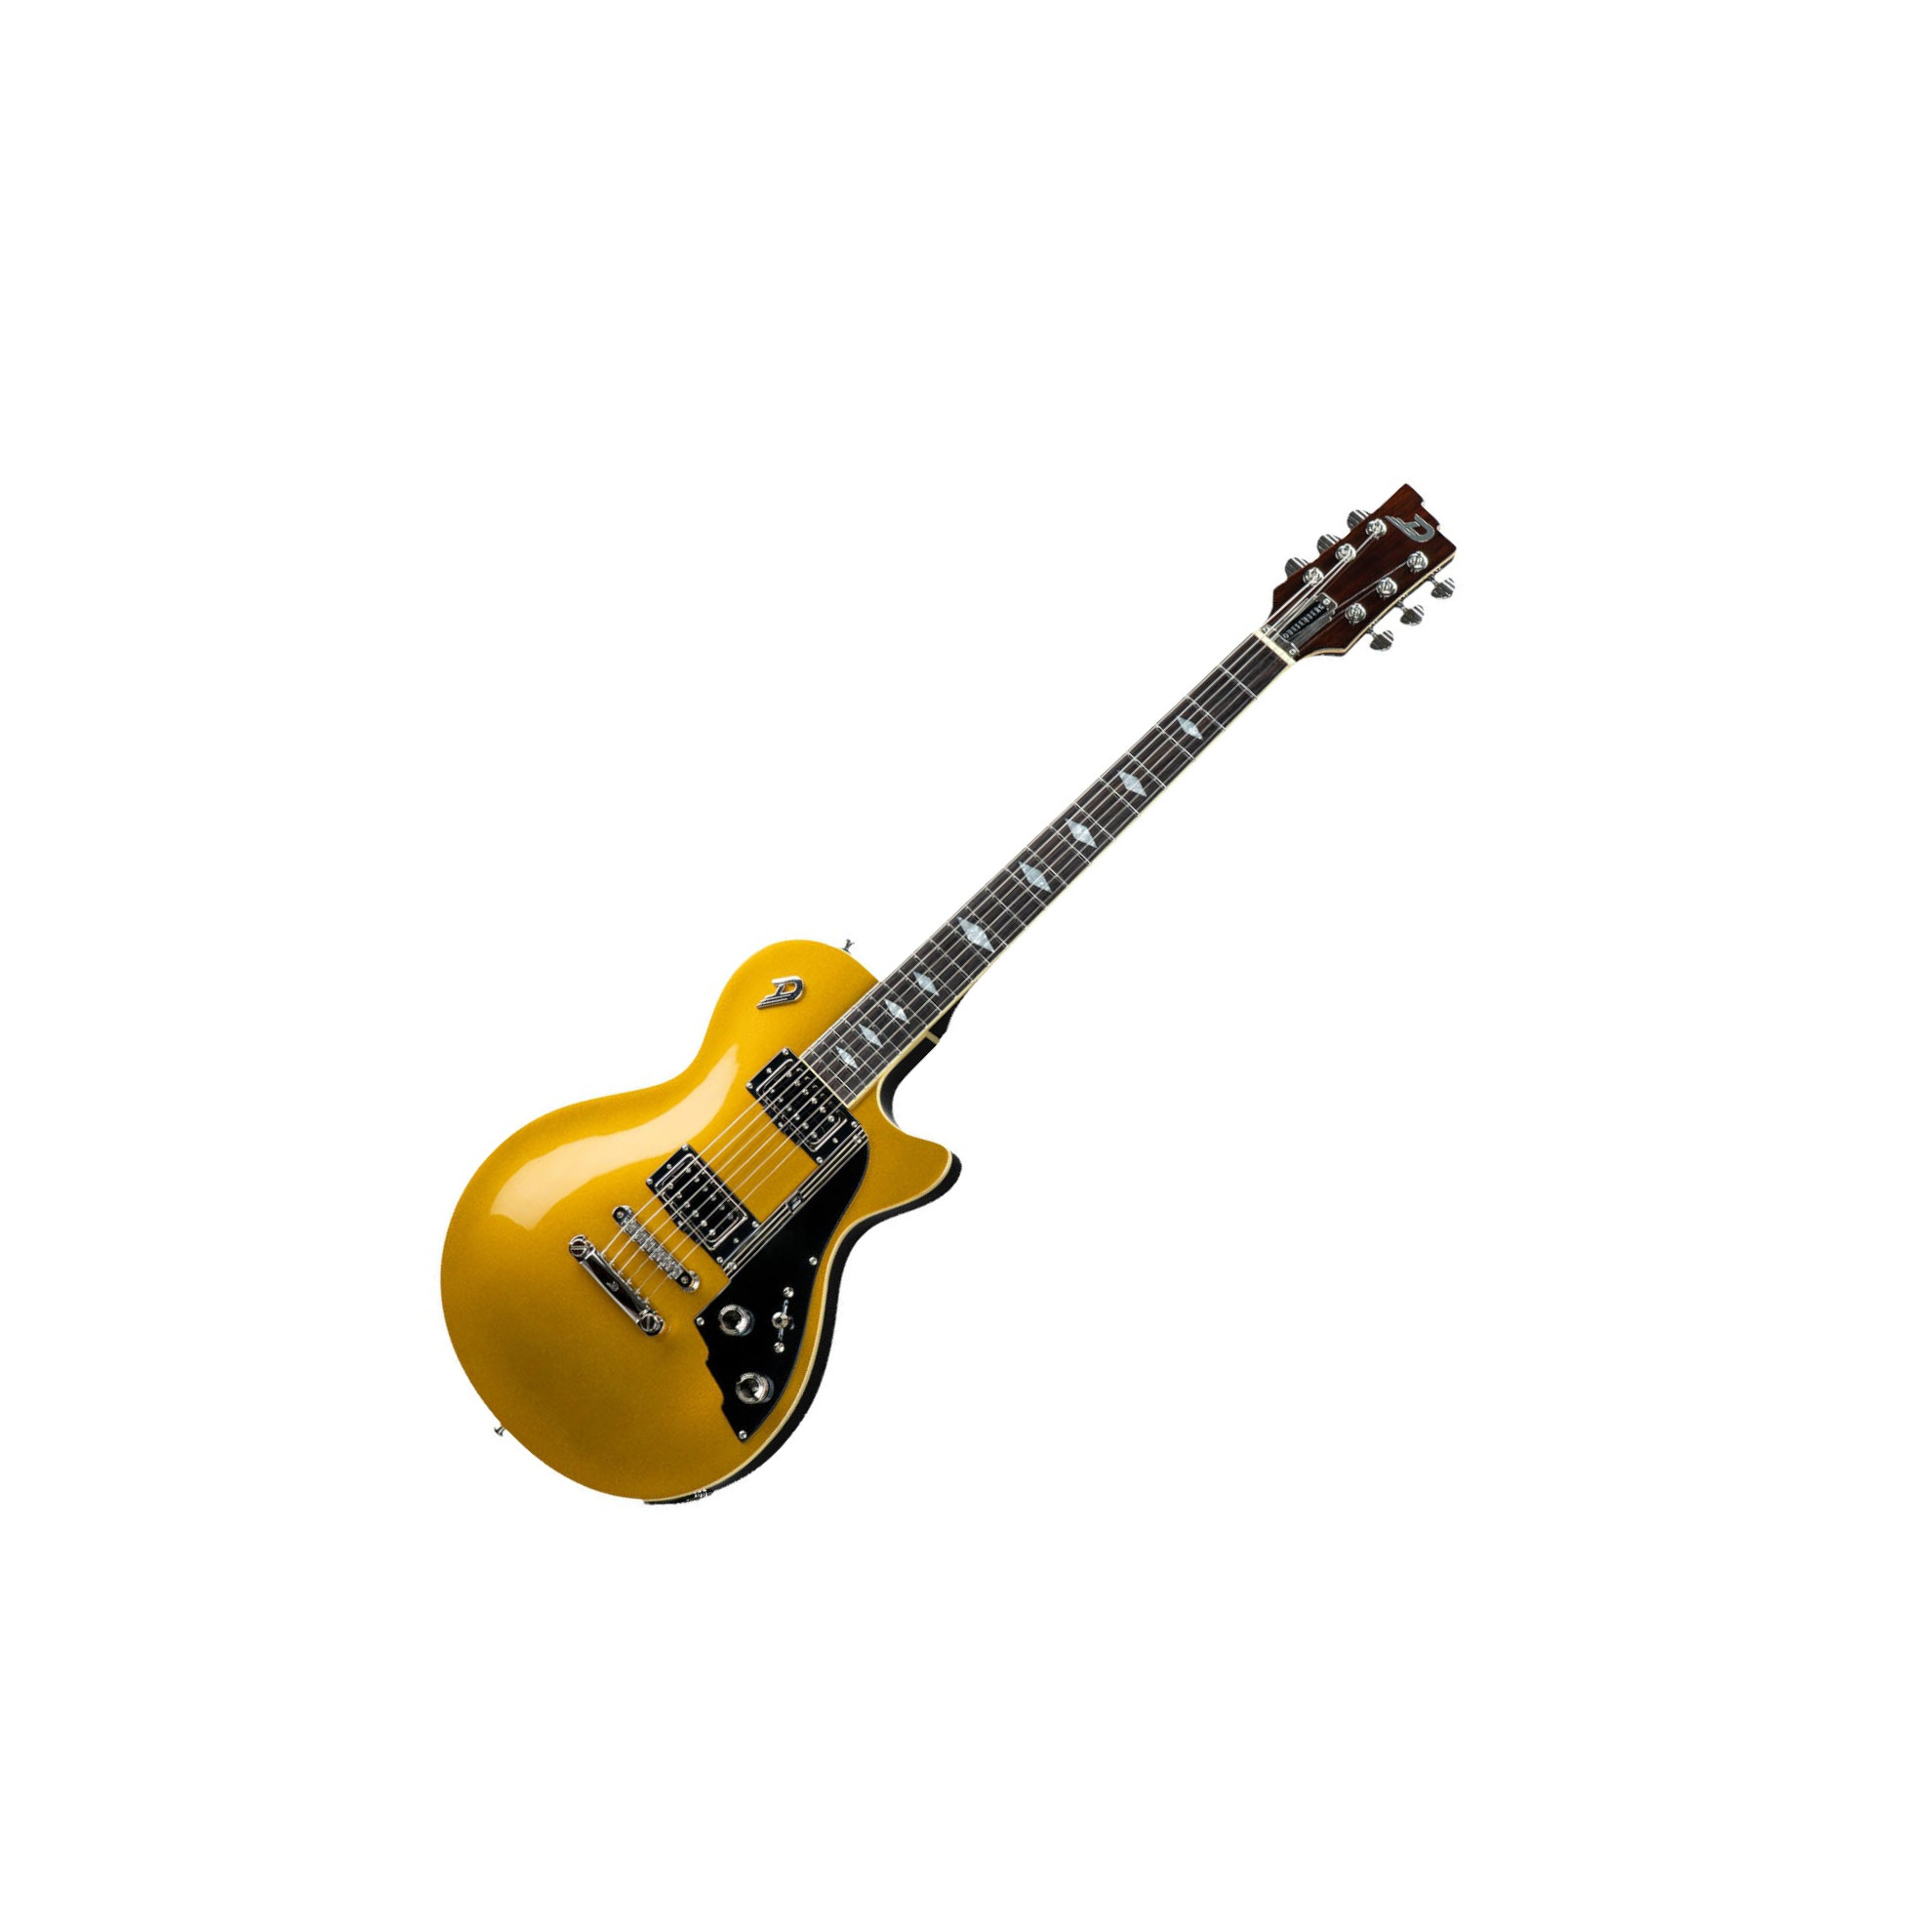 Duesenberg 59er 2h Ht Rw - Gold Top - Enkel gesneden elektrische gitaar - Variation 1